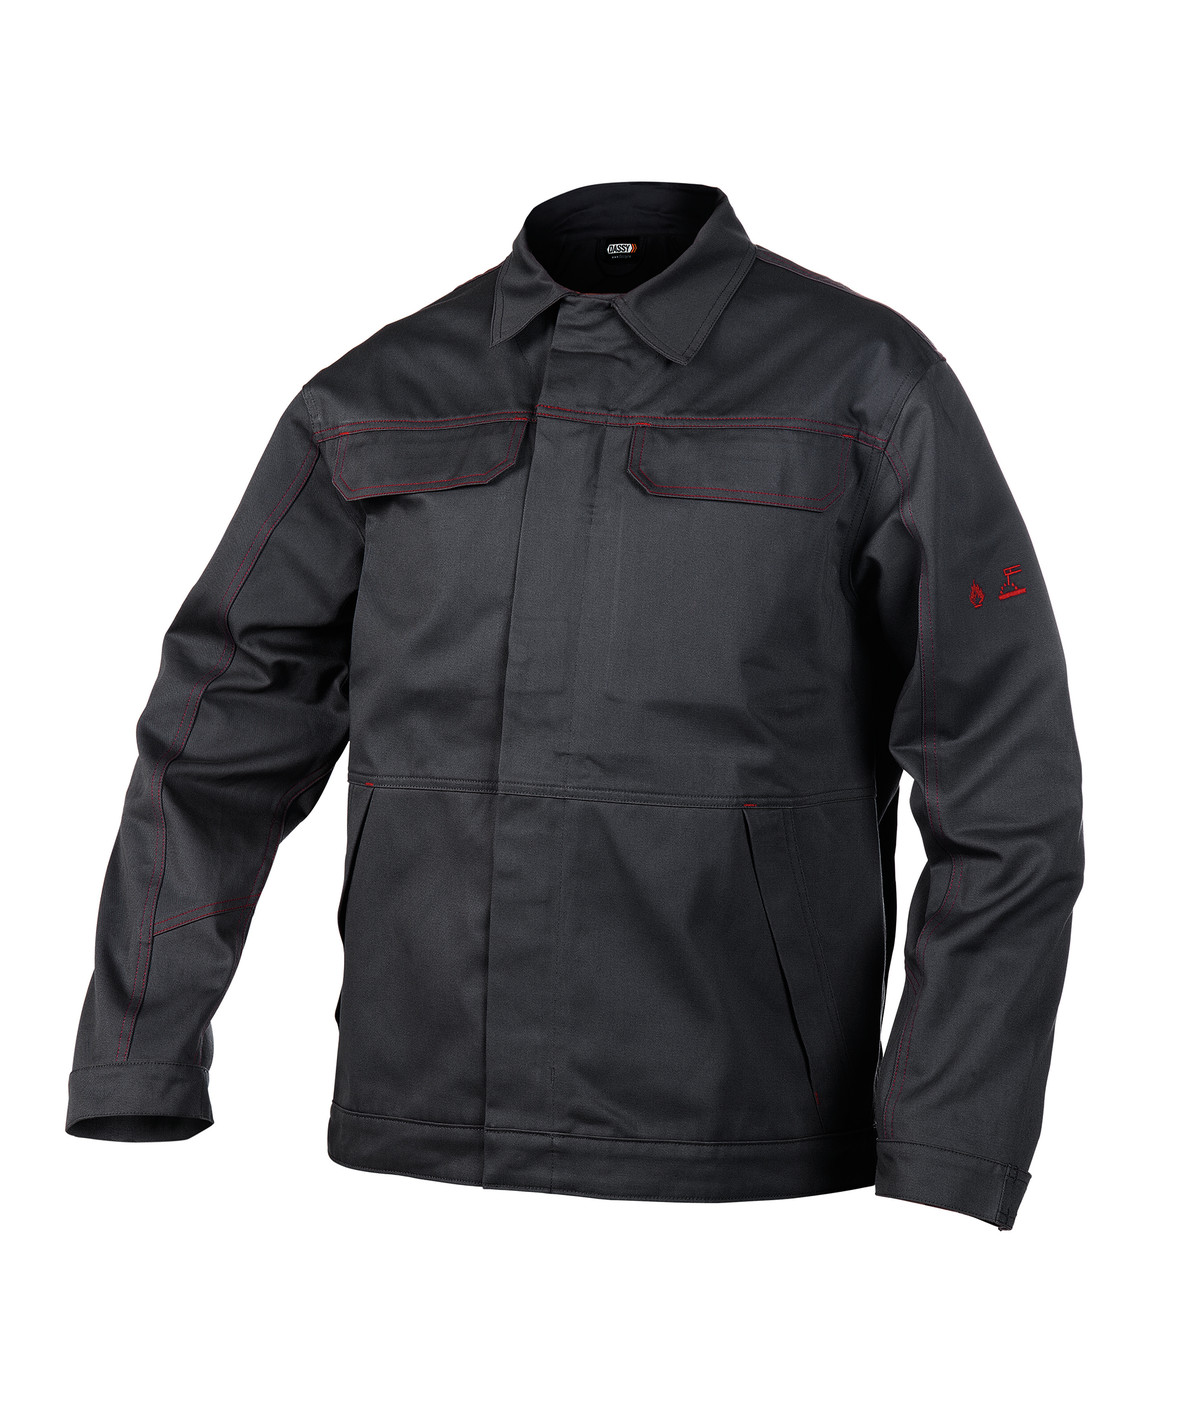 MONTANA - Flame retardant work jacket